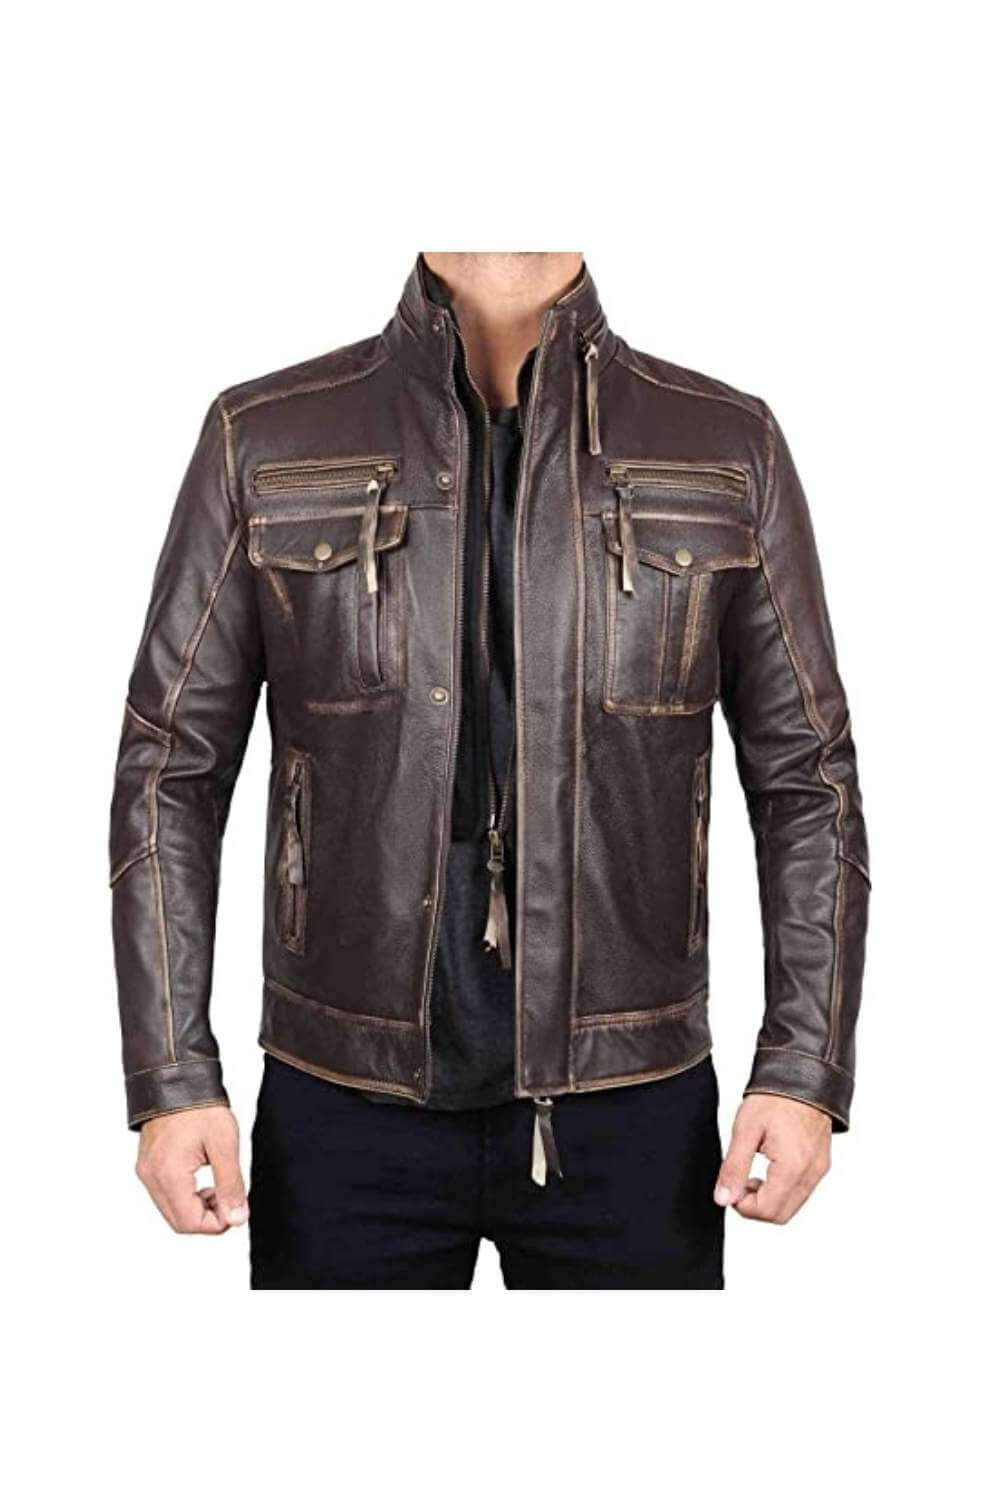 Buy Leather Biker Jackets For Men | Men's Biker Jackets